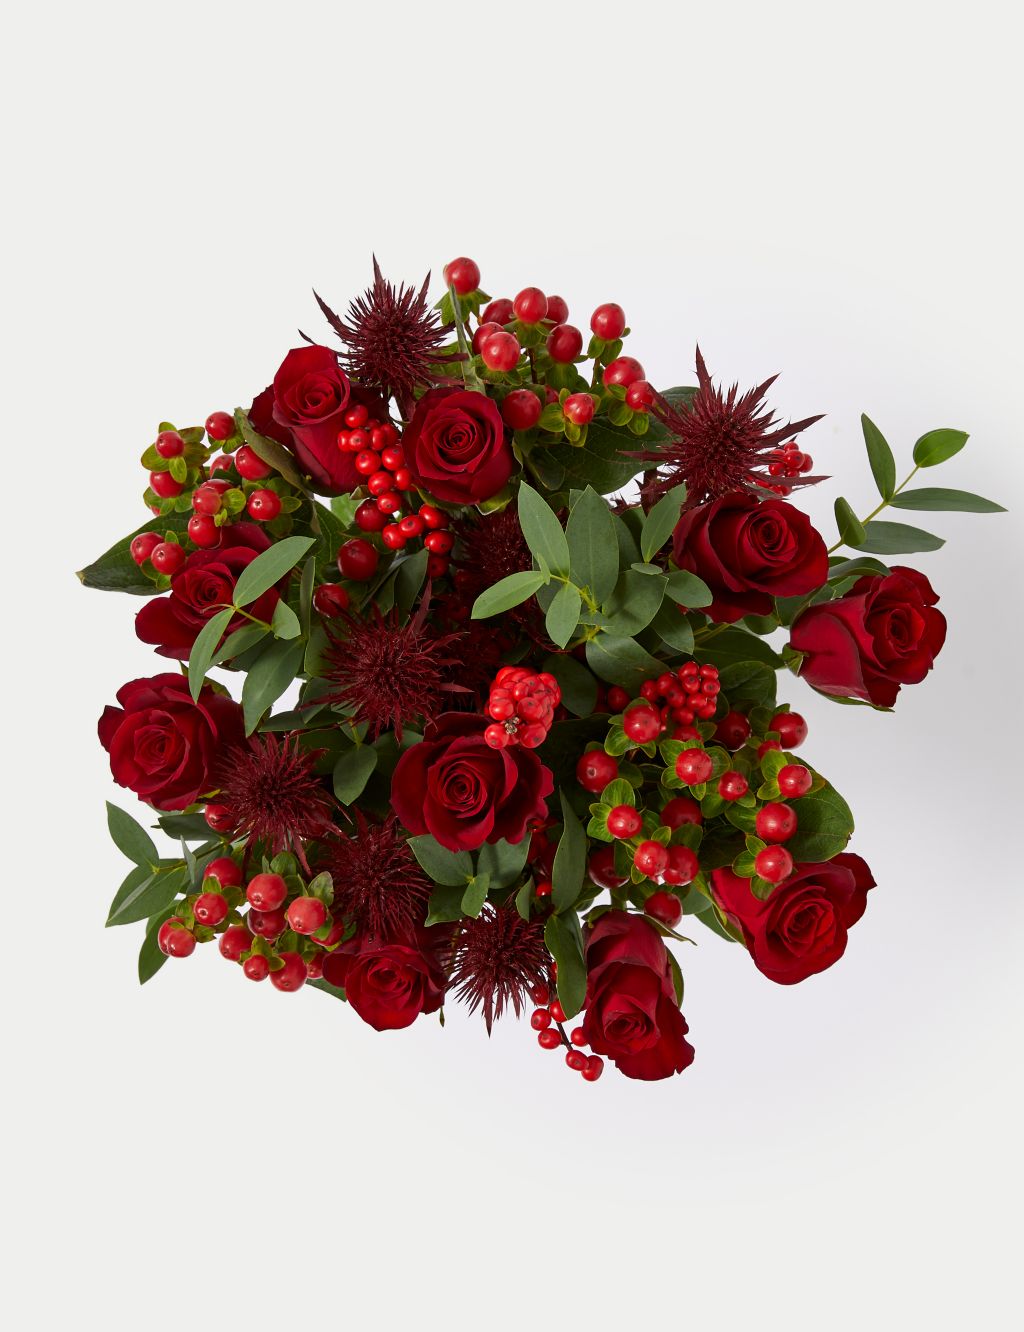 Festive Red Rose Bouquet in Vase image 2